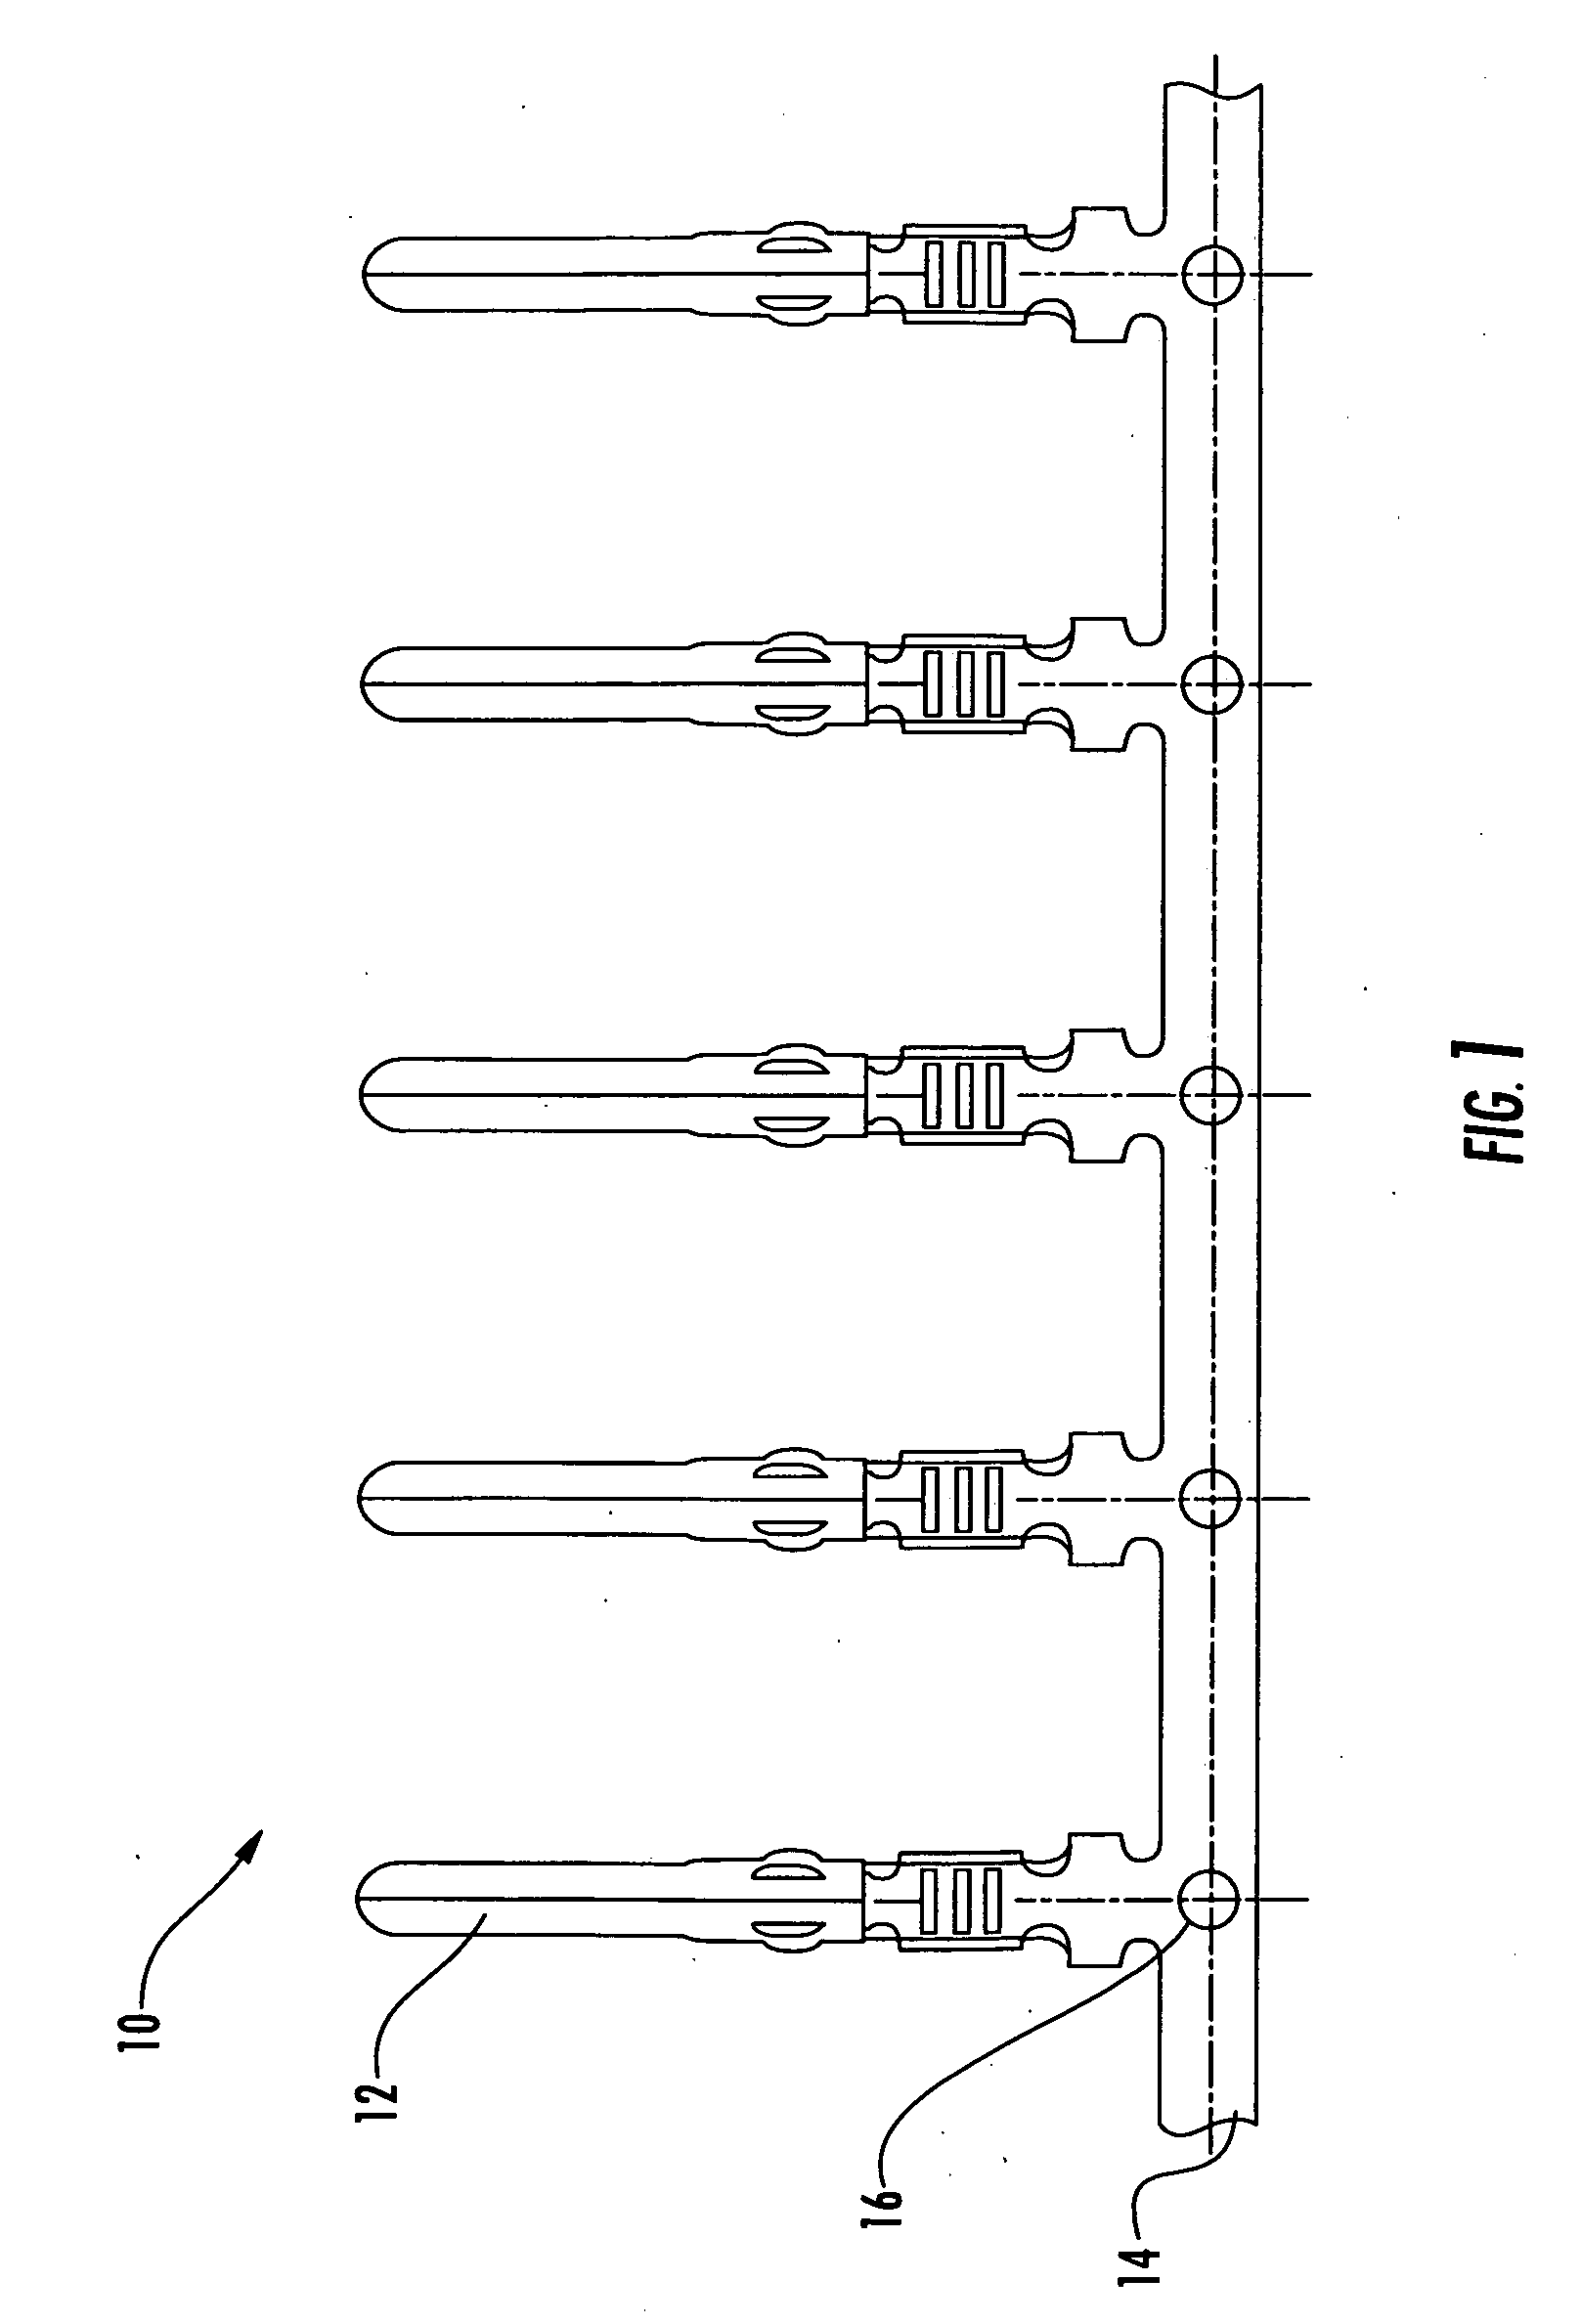 Terminal applicator apparatus, system, and method